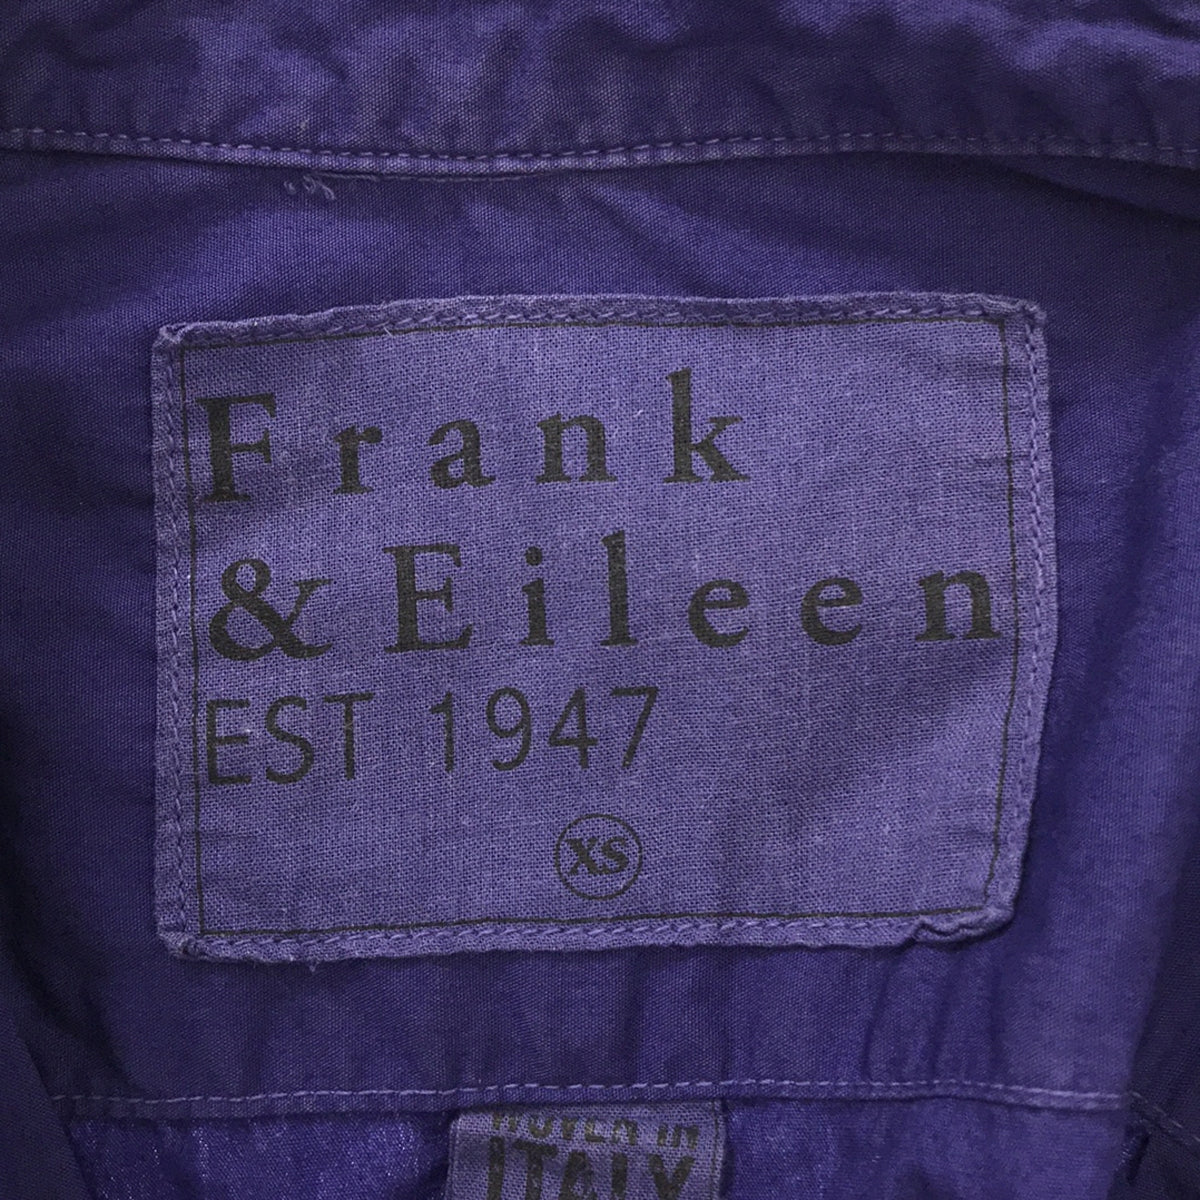 Frank&Eileen / フランクアンドアイリーン | BARRY 製品染め コットンシャツ | XS | パープル | レディース